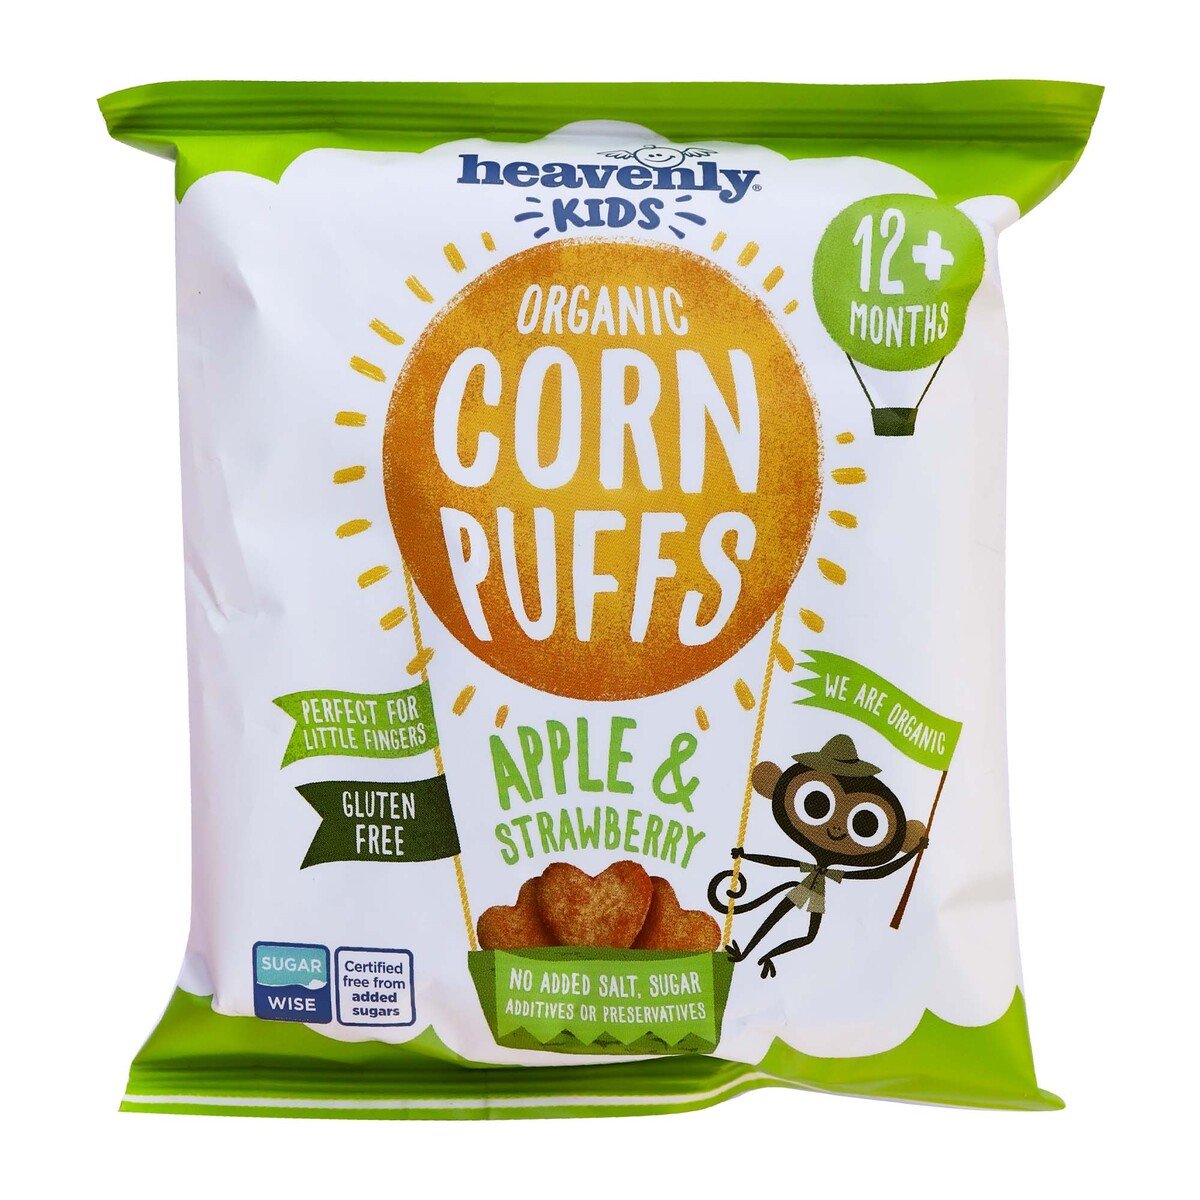 Heavenly Kids Organic Corn Puffs Apple &Strawberry 12+ months 15g